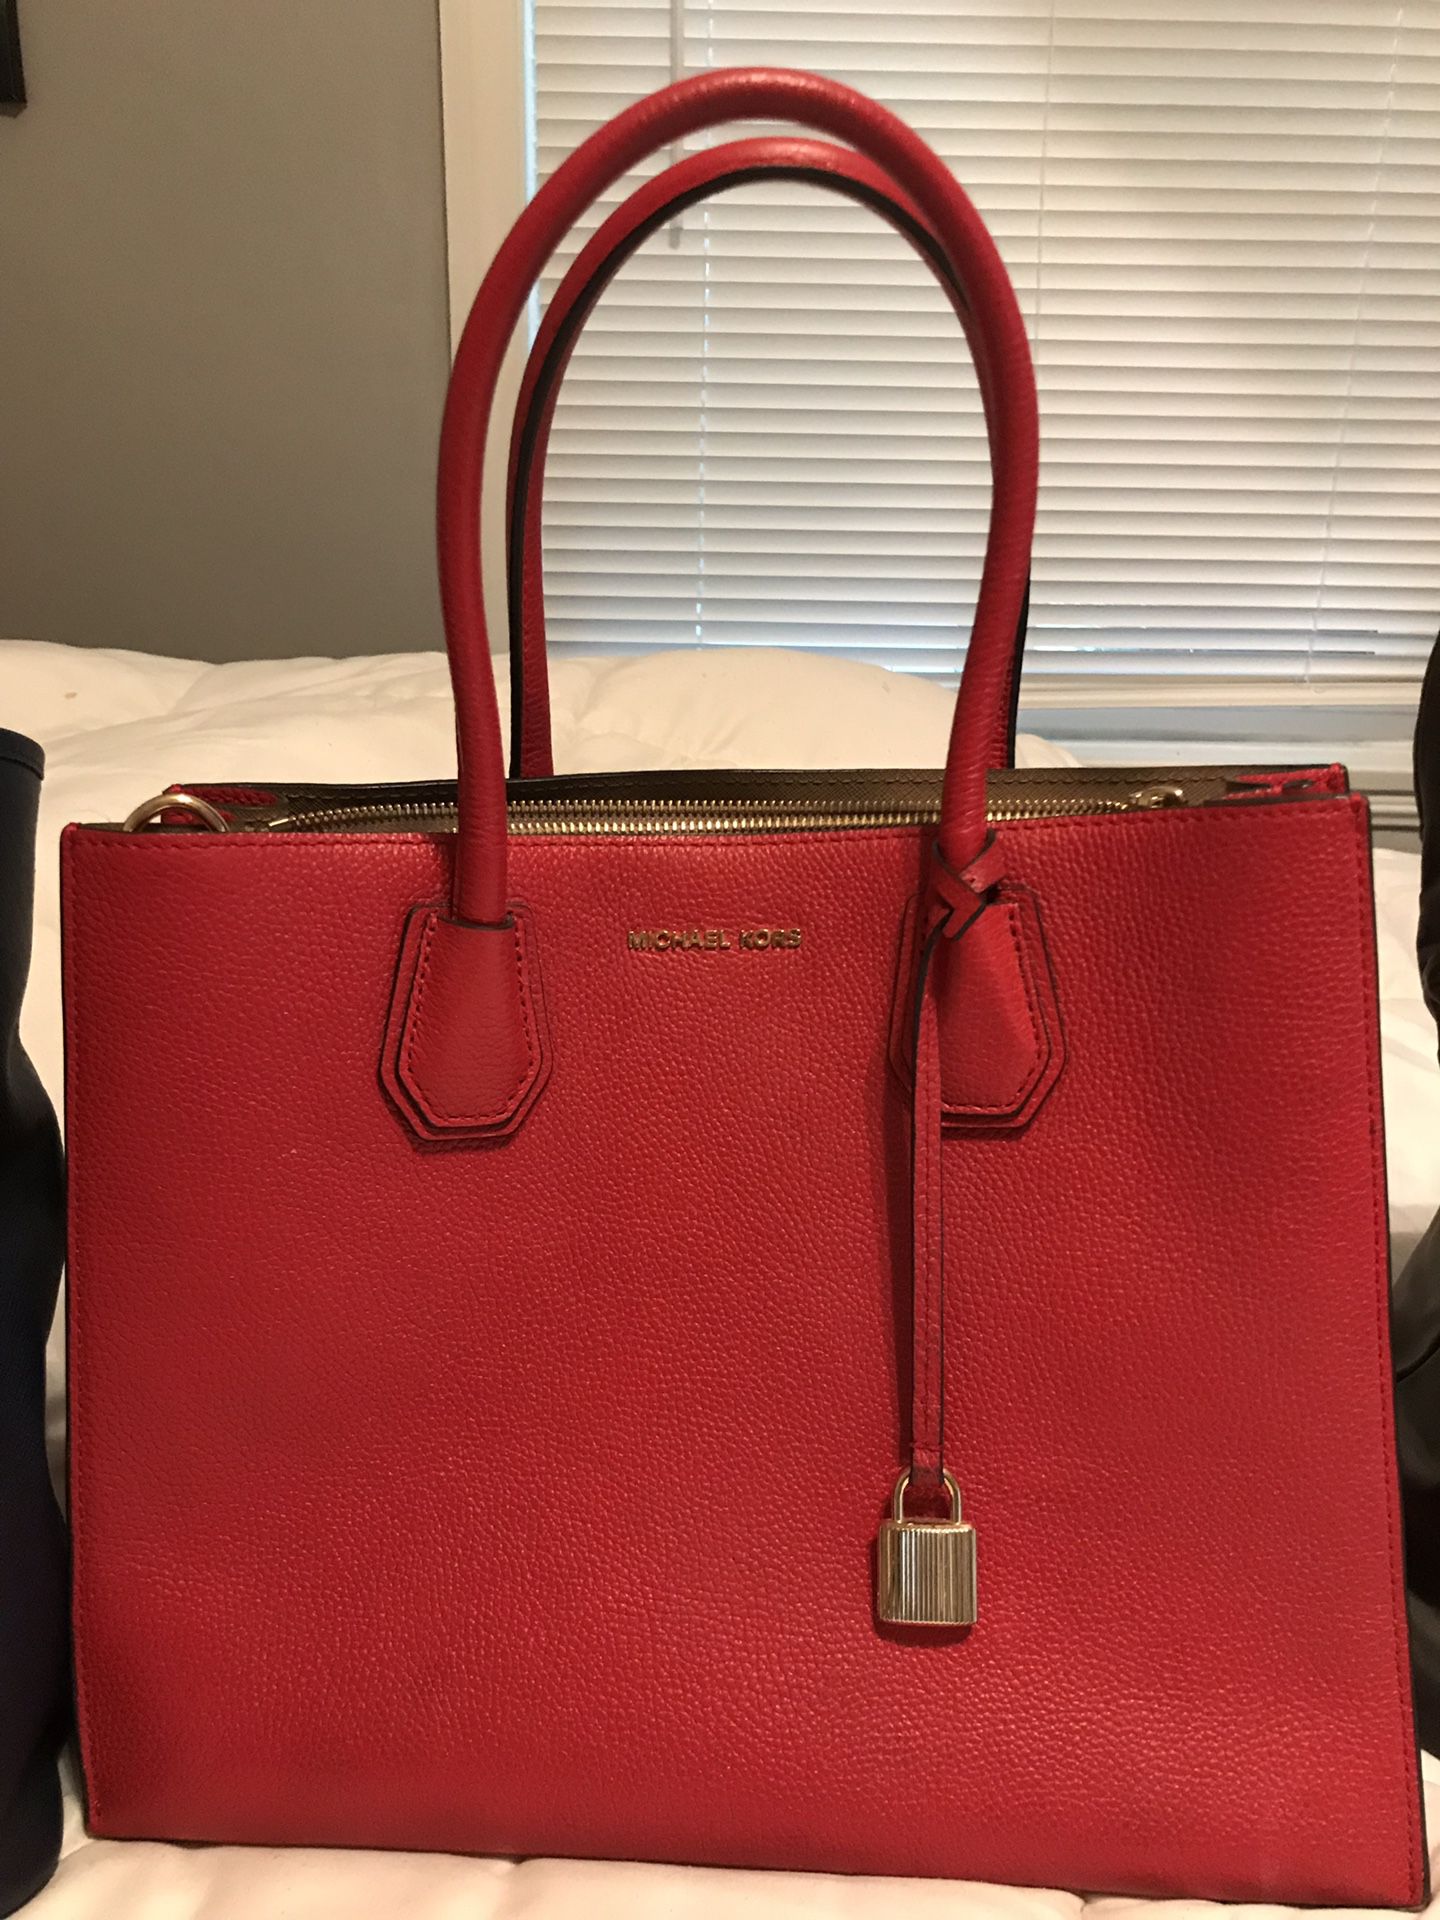 Michael Kors red medium tote purse